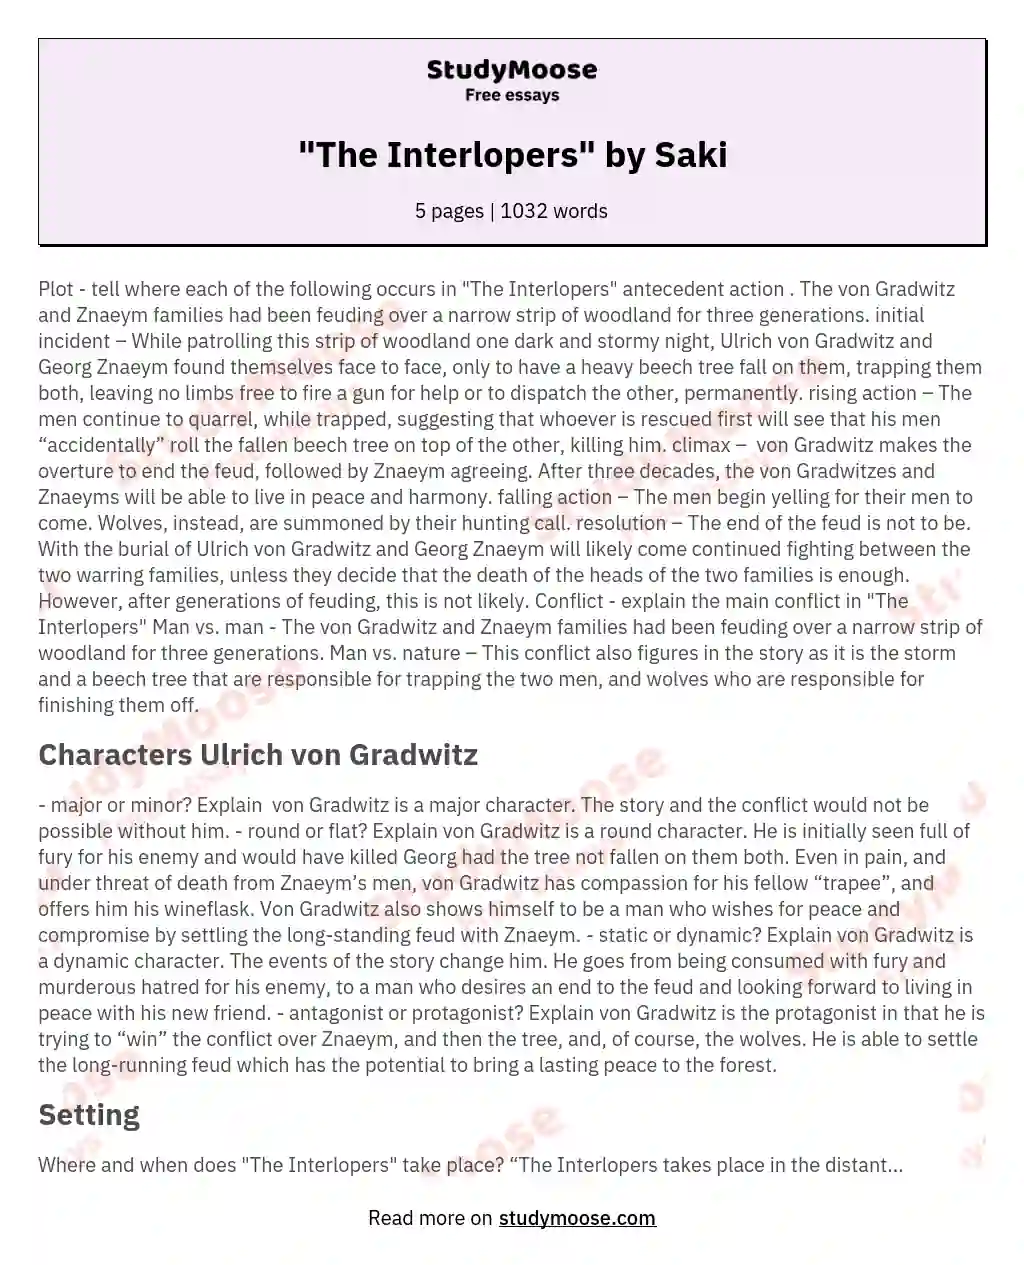 "The Interlopers" by Saki essay